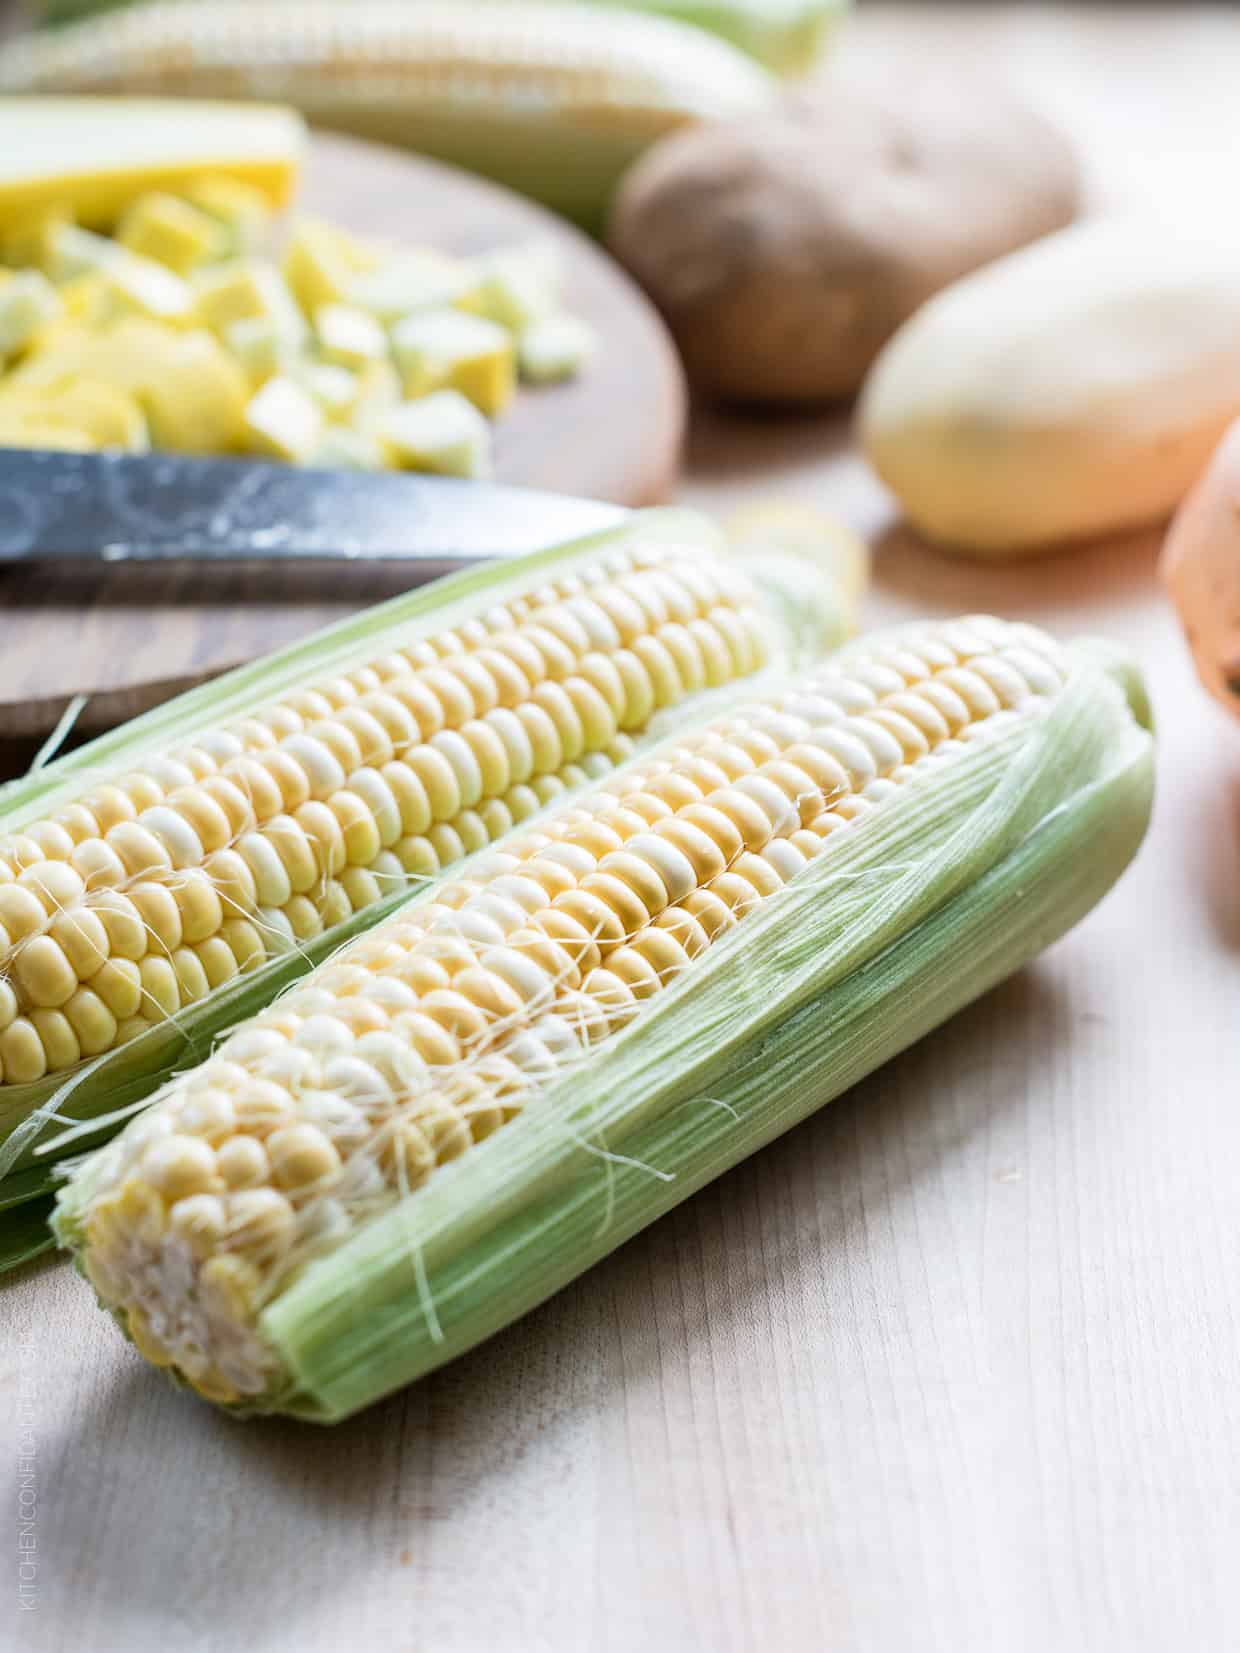 Fresh ears of corn on the cob.